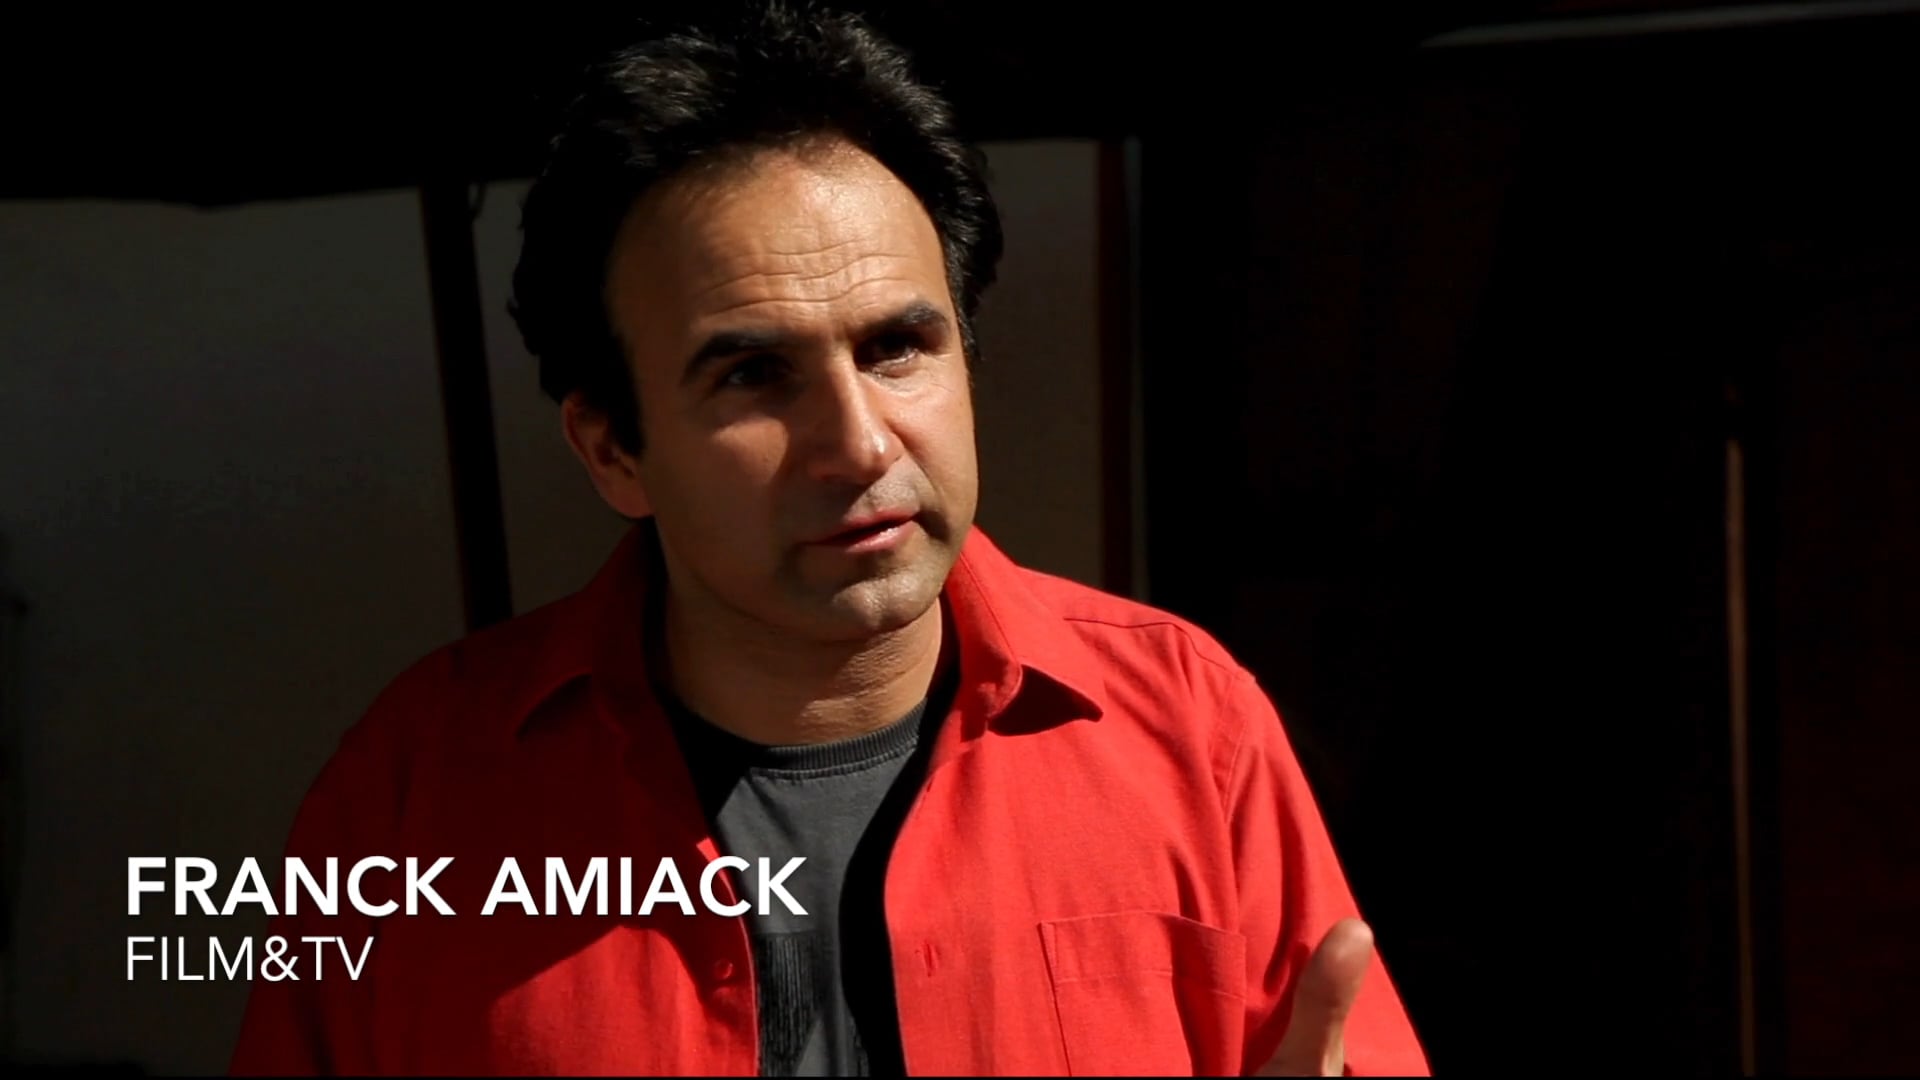 Franck Amiack Film